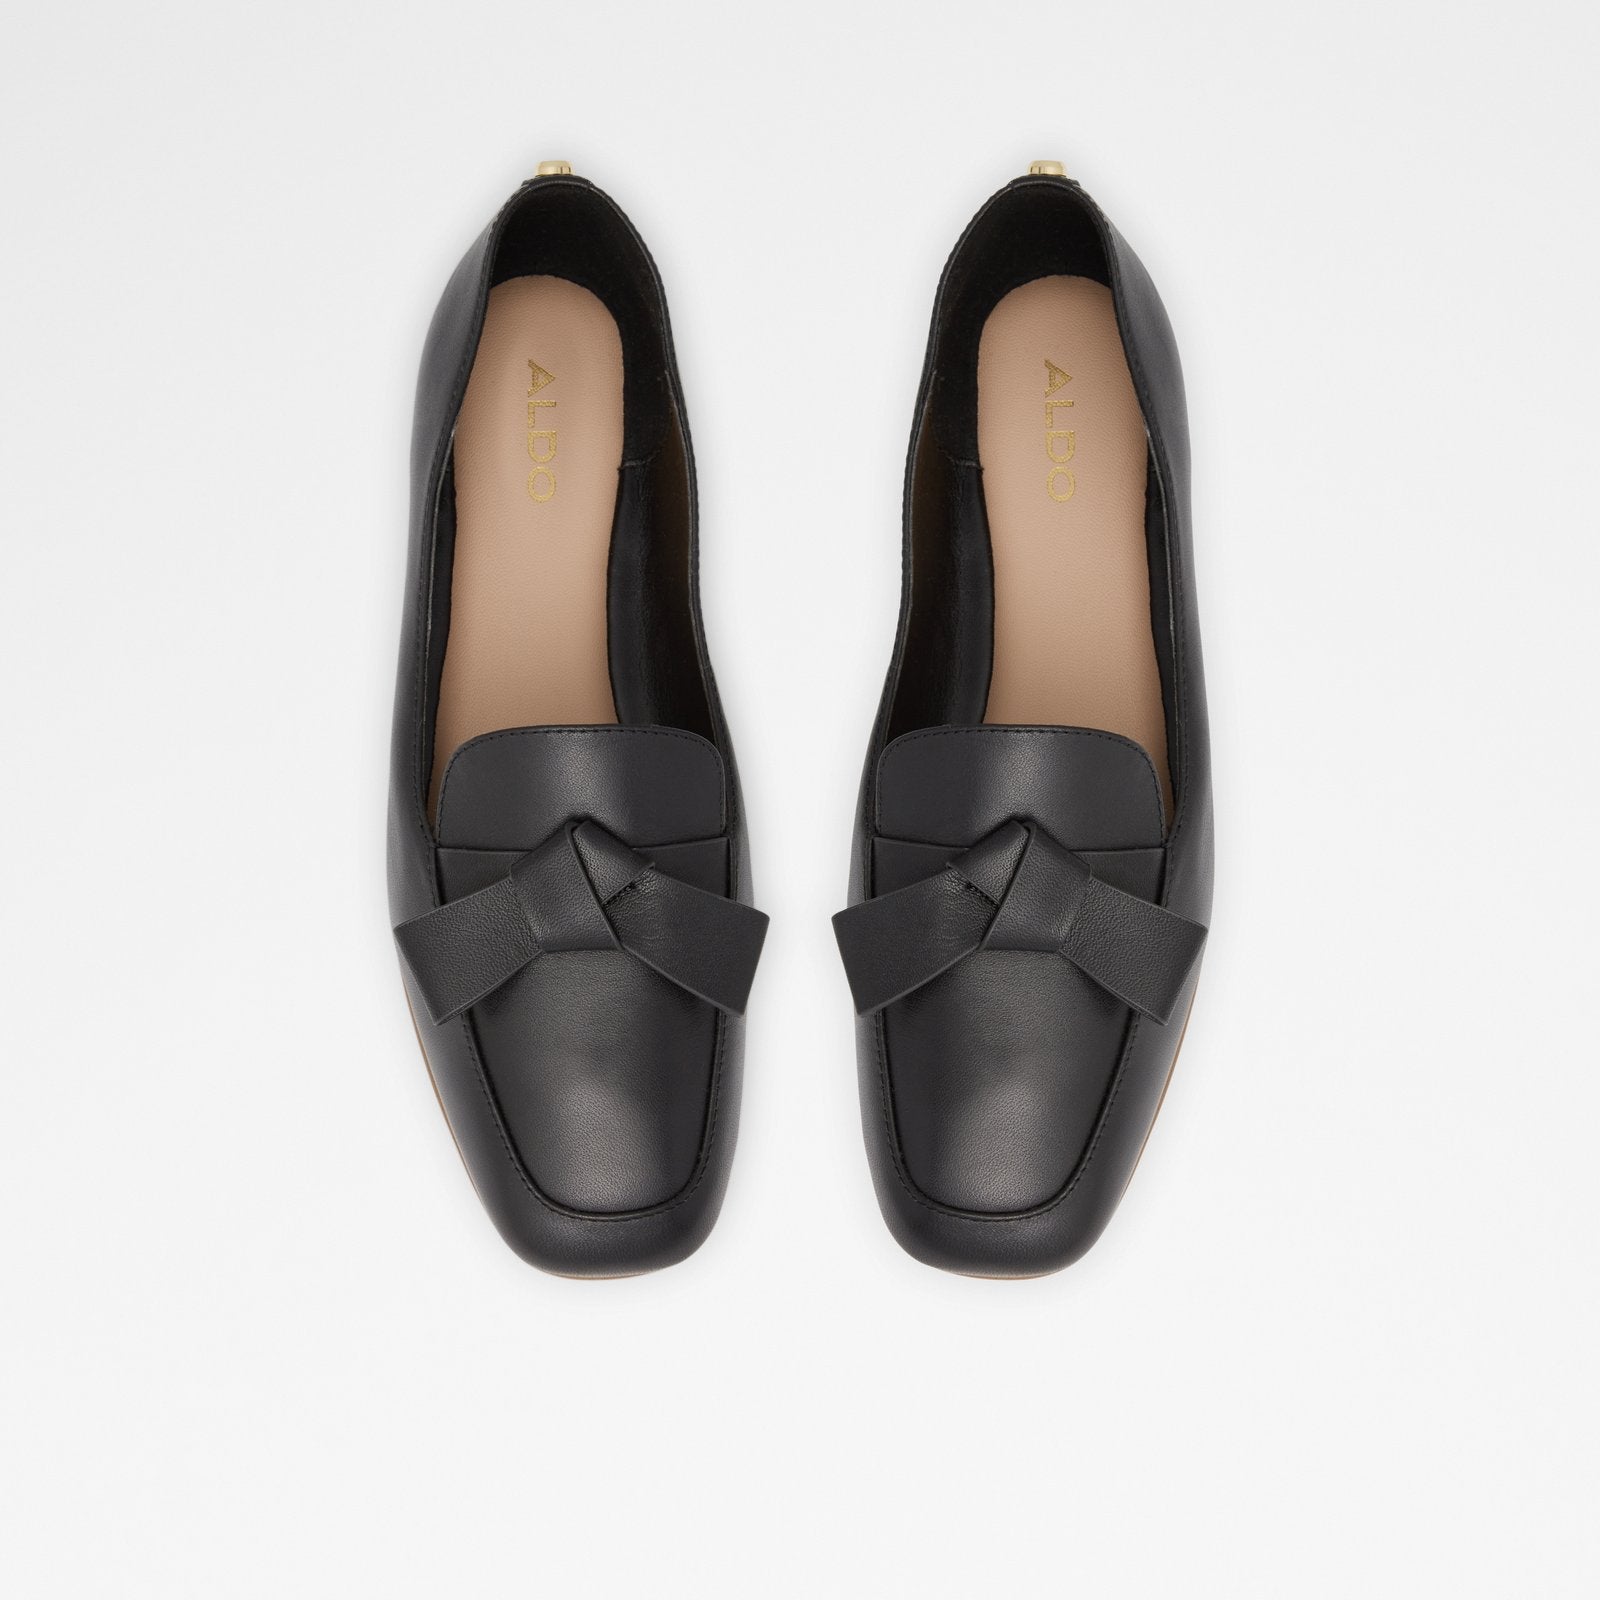 Lemonnier Women Shoes - Black - ALDO KSA